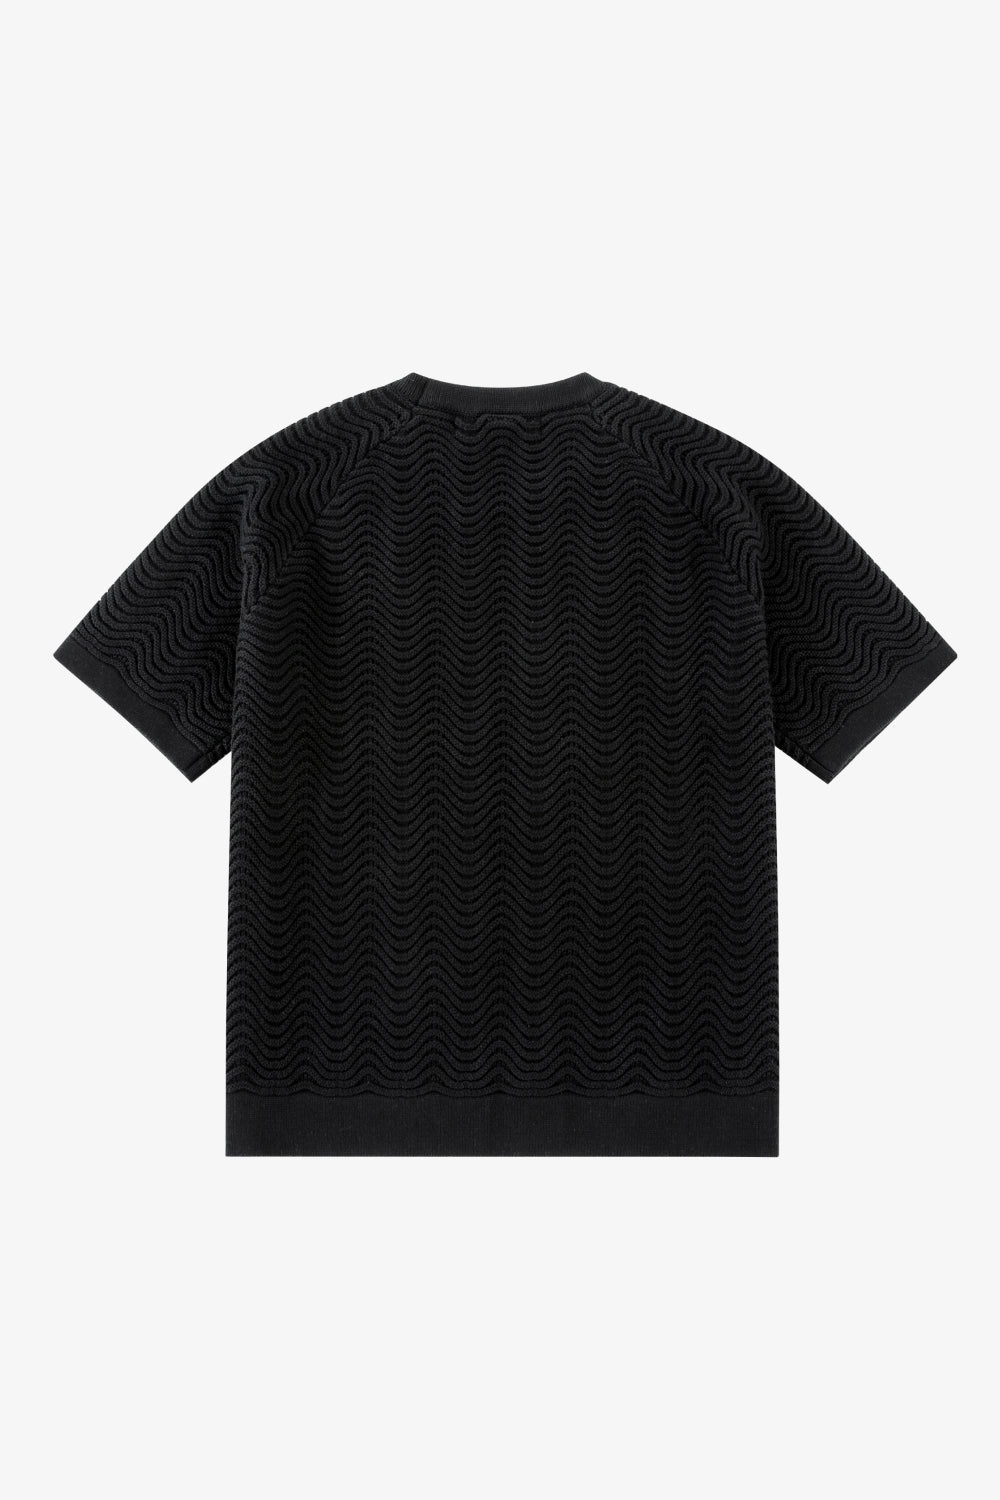 Black Shale Stitch Knit T-Shirt